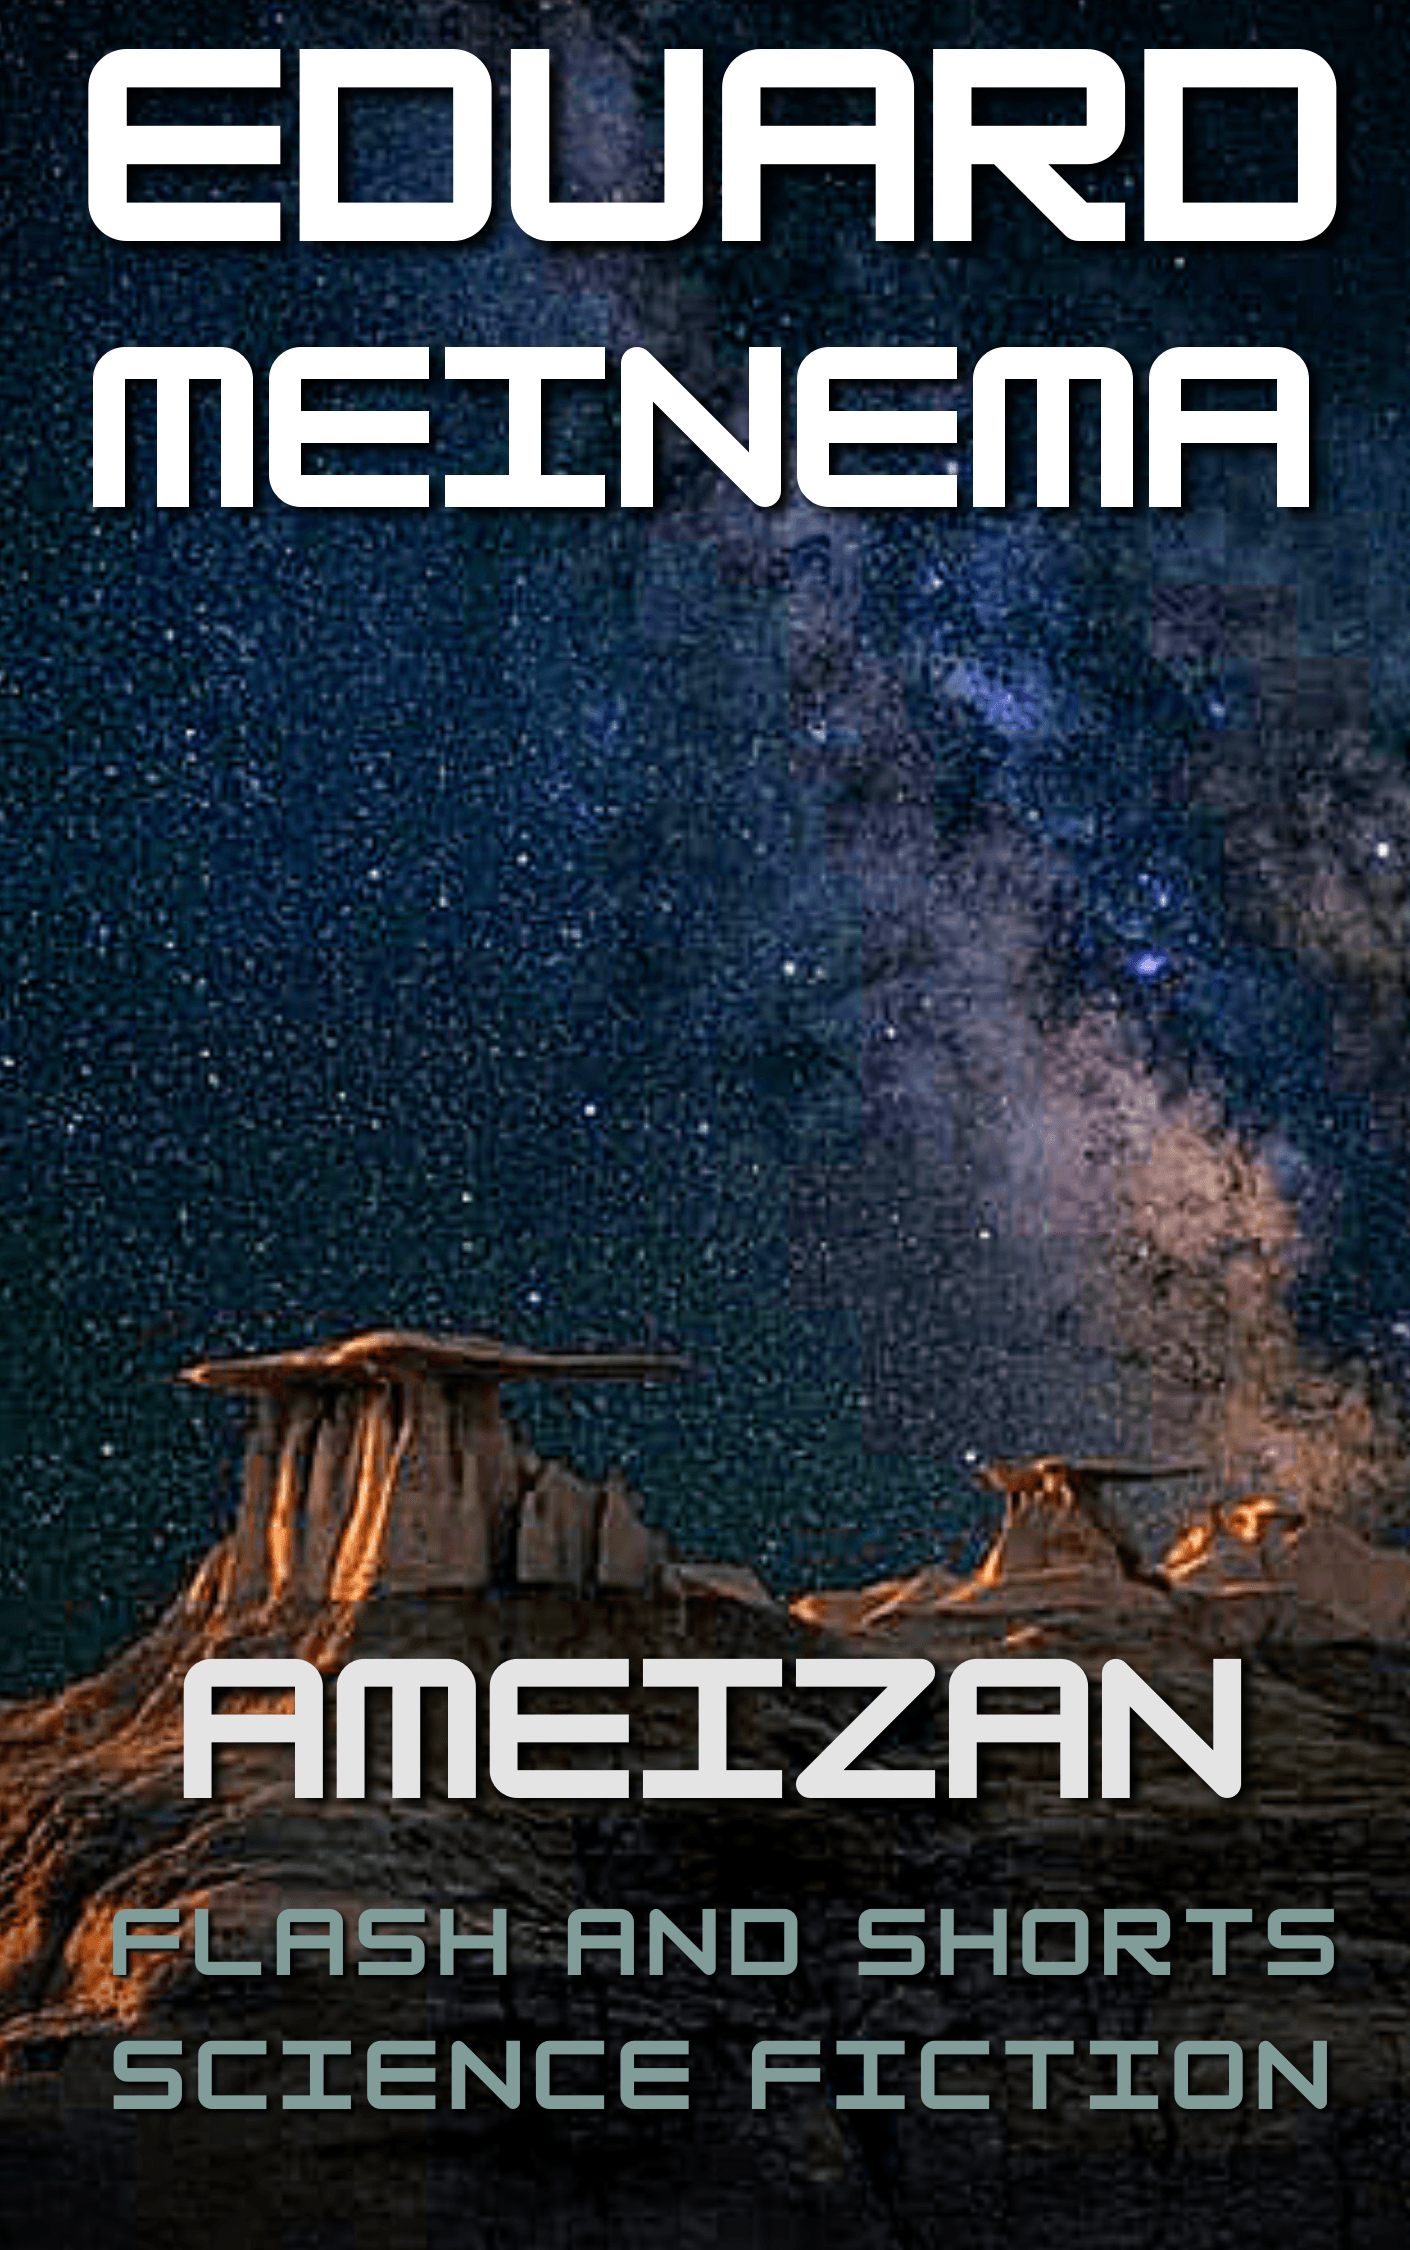 Ameizan, a Short SF Story by Eduard Meinema.